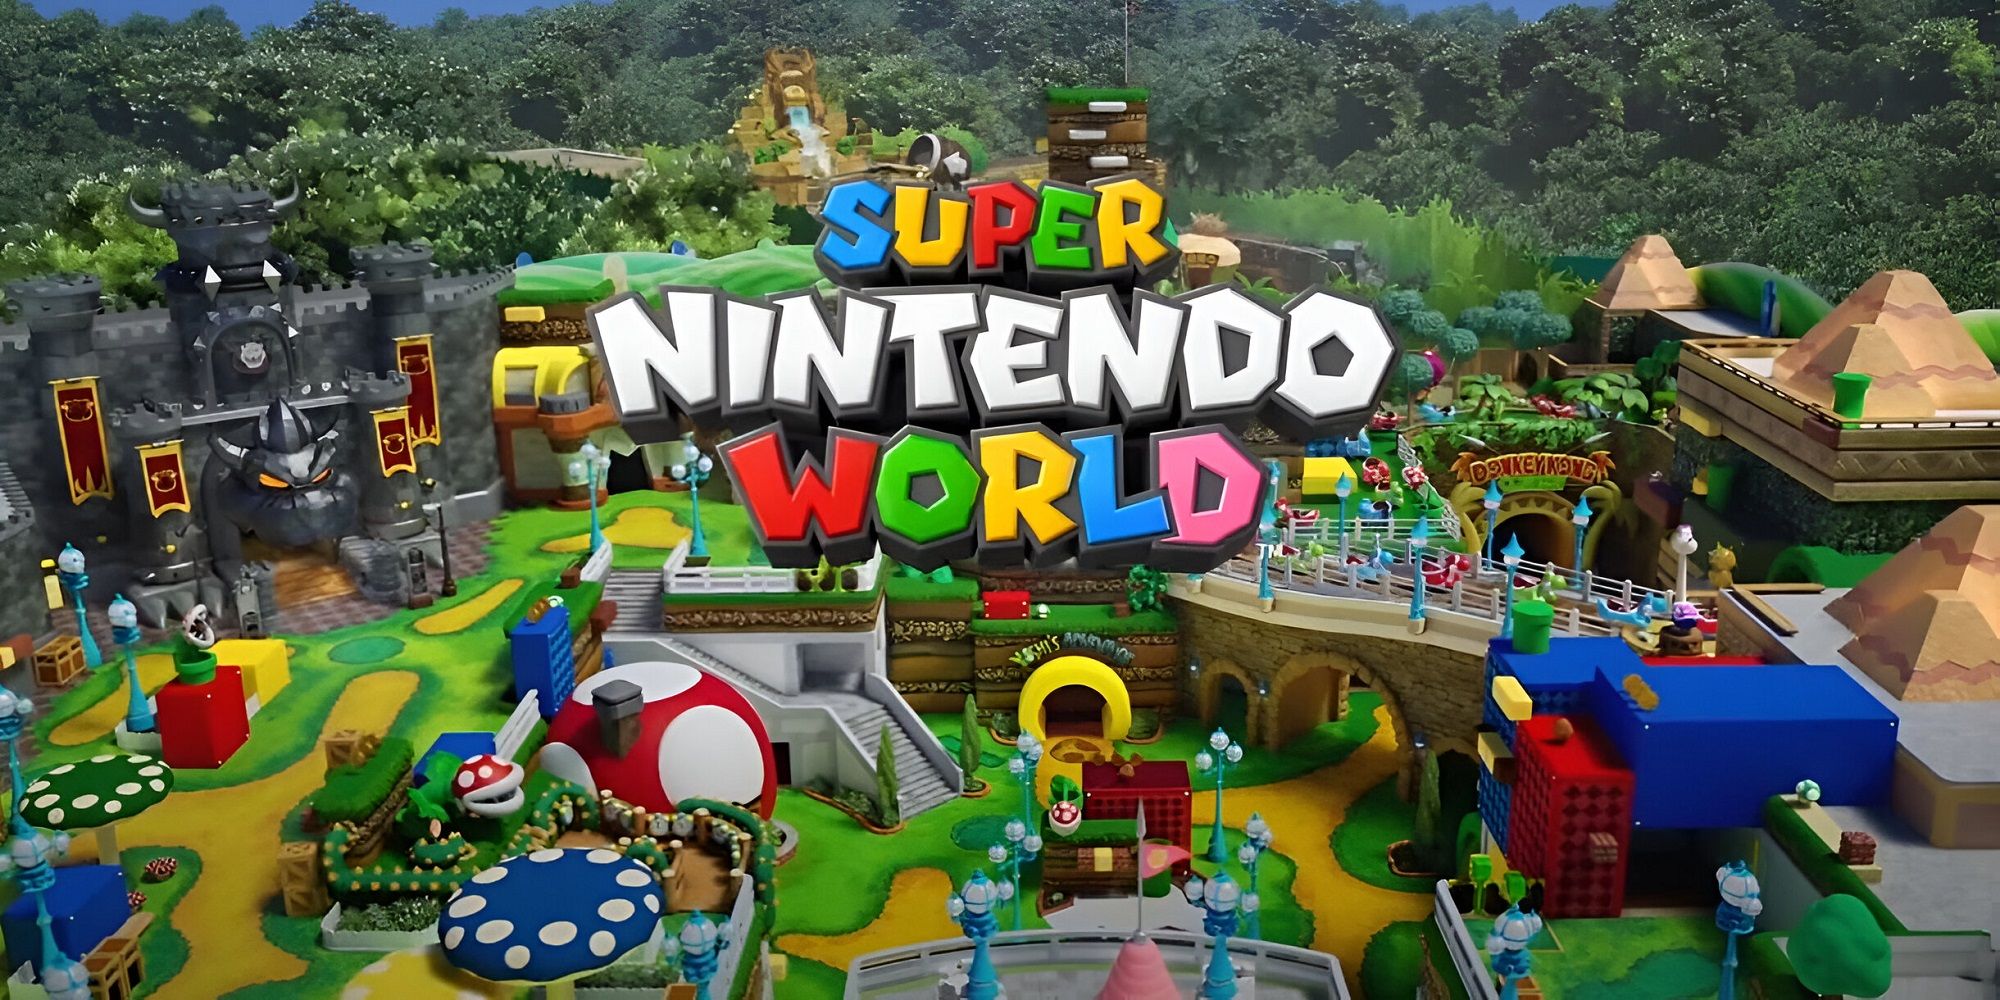 Mario and Donkey Kong Join Super Nintendo World Orlando